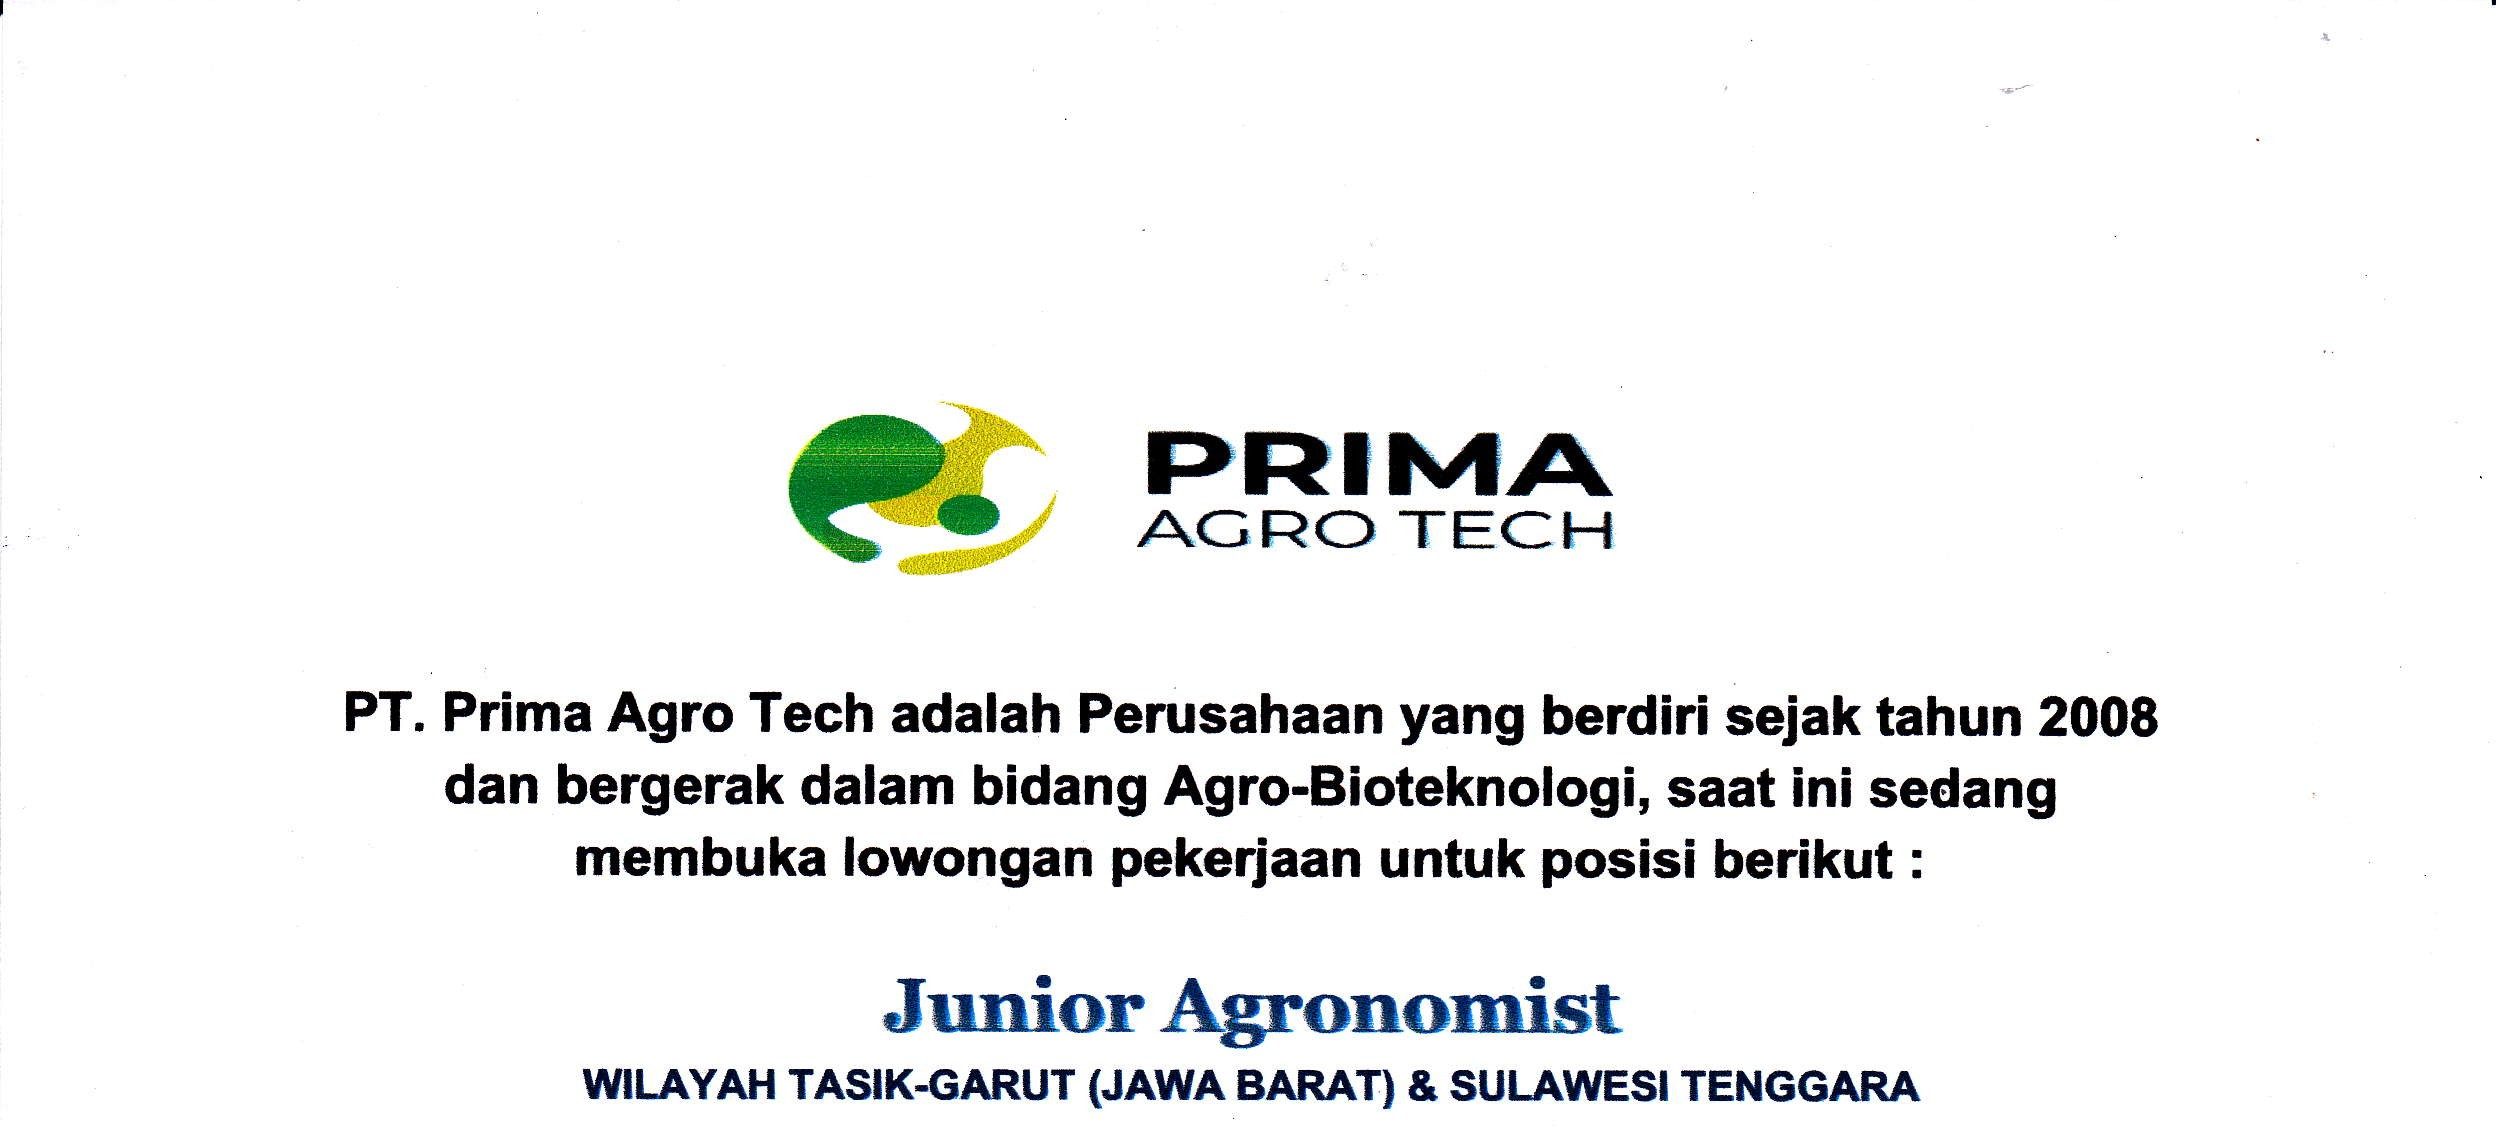 PT. Prima Agro Tech